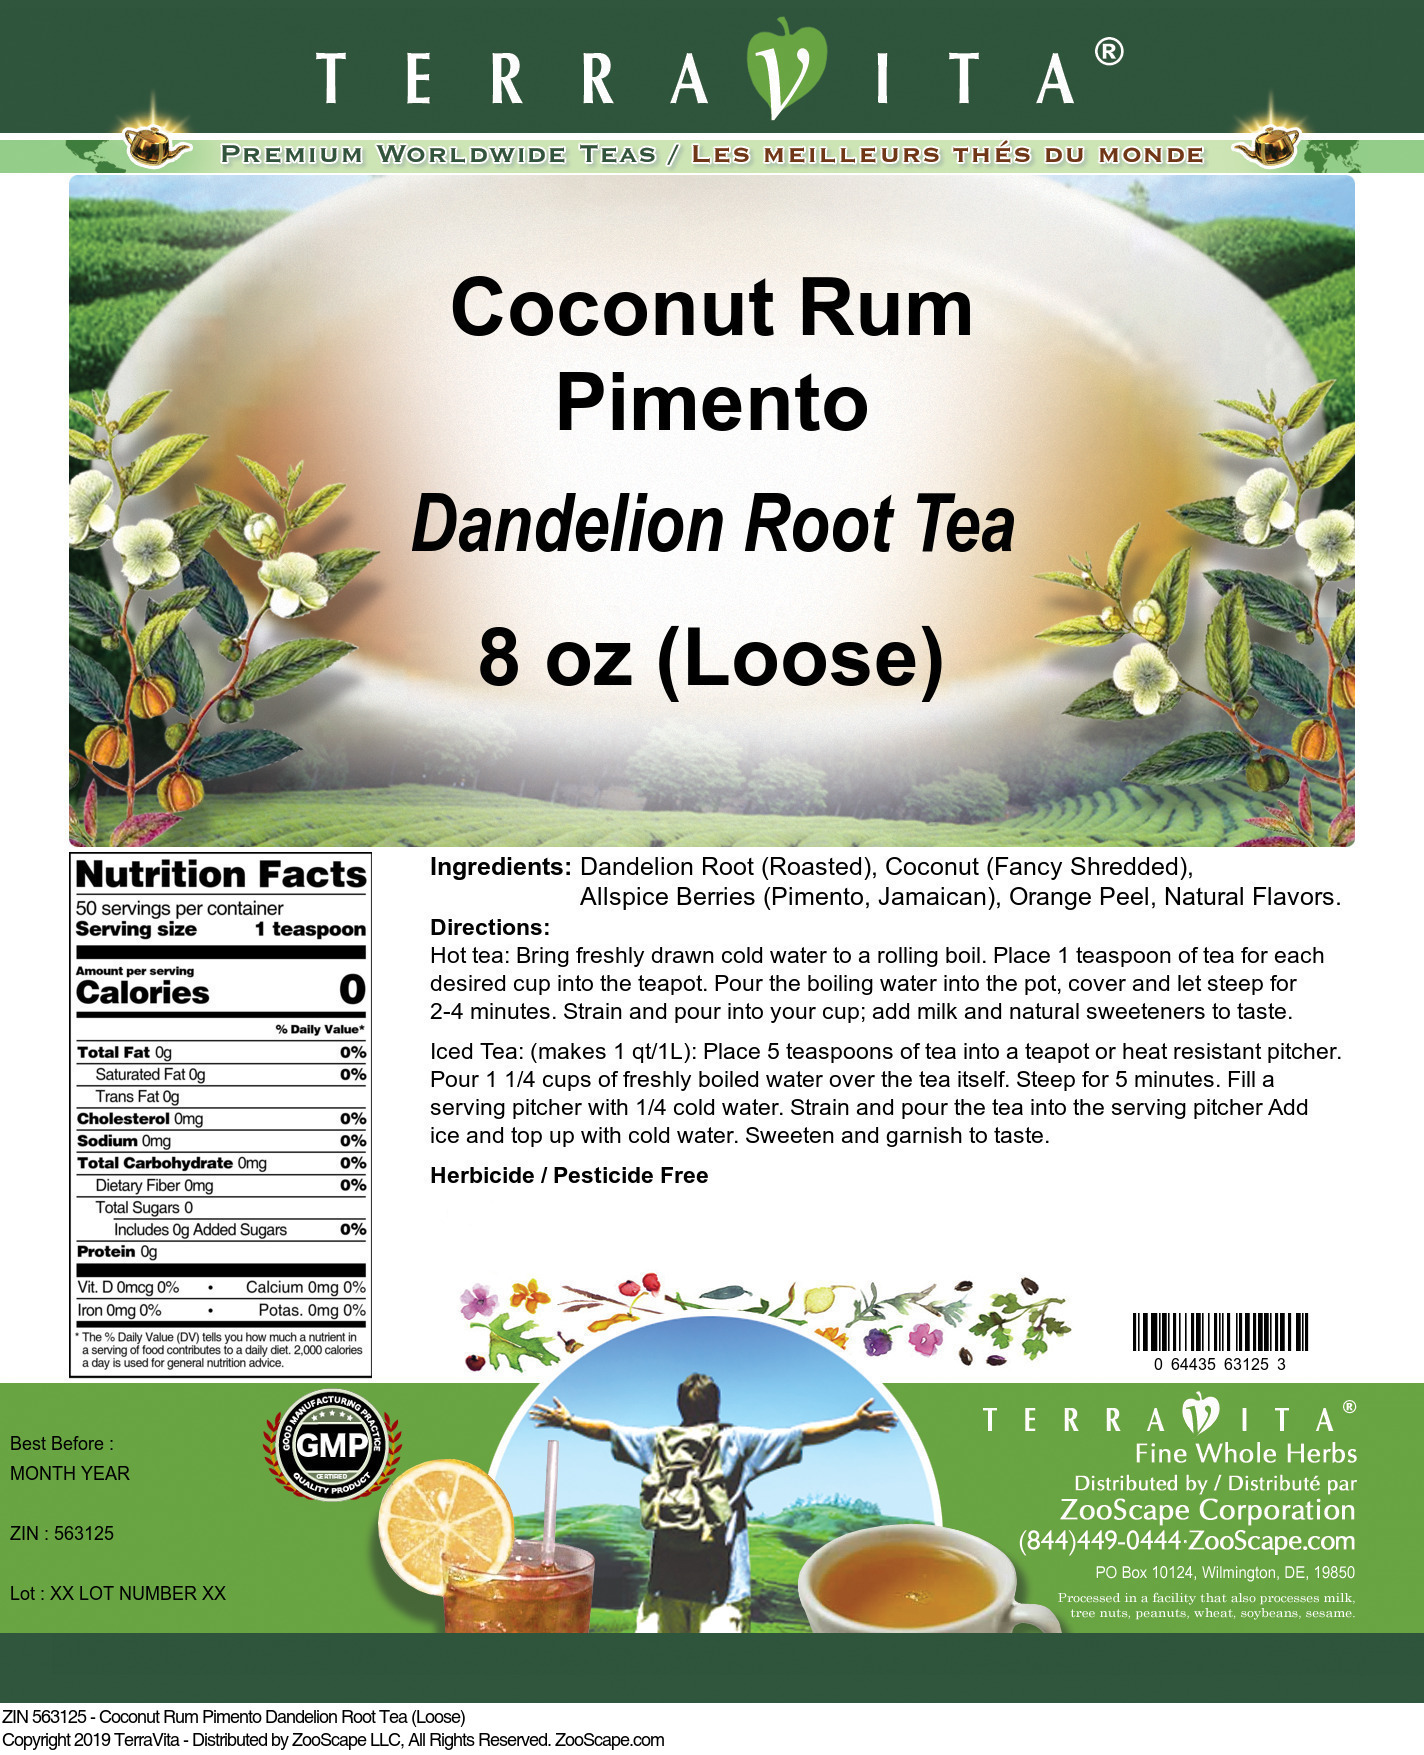 Coconut Rum Pimento Dandelion Root Tea (Loose) - Label